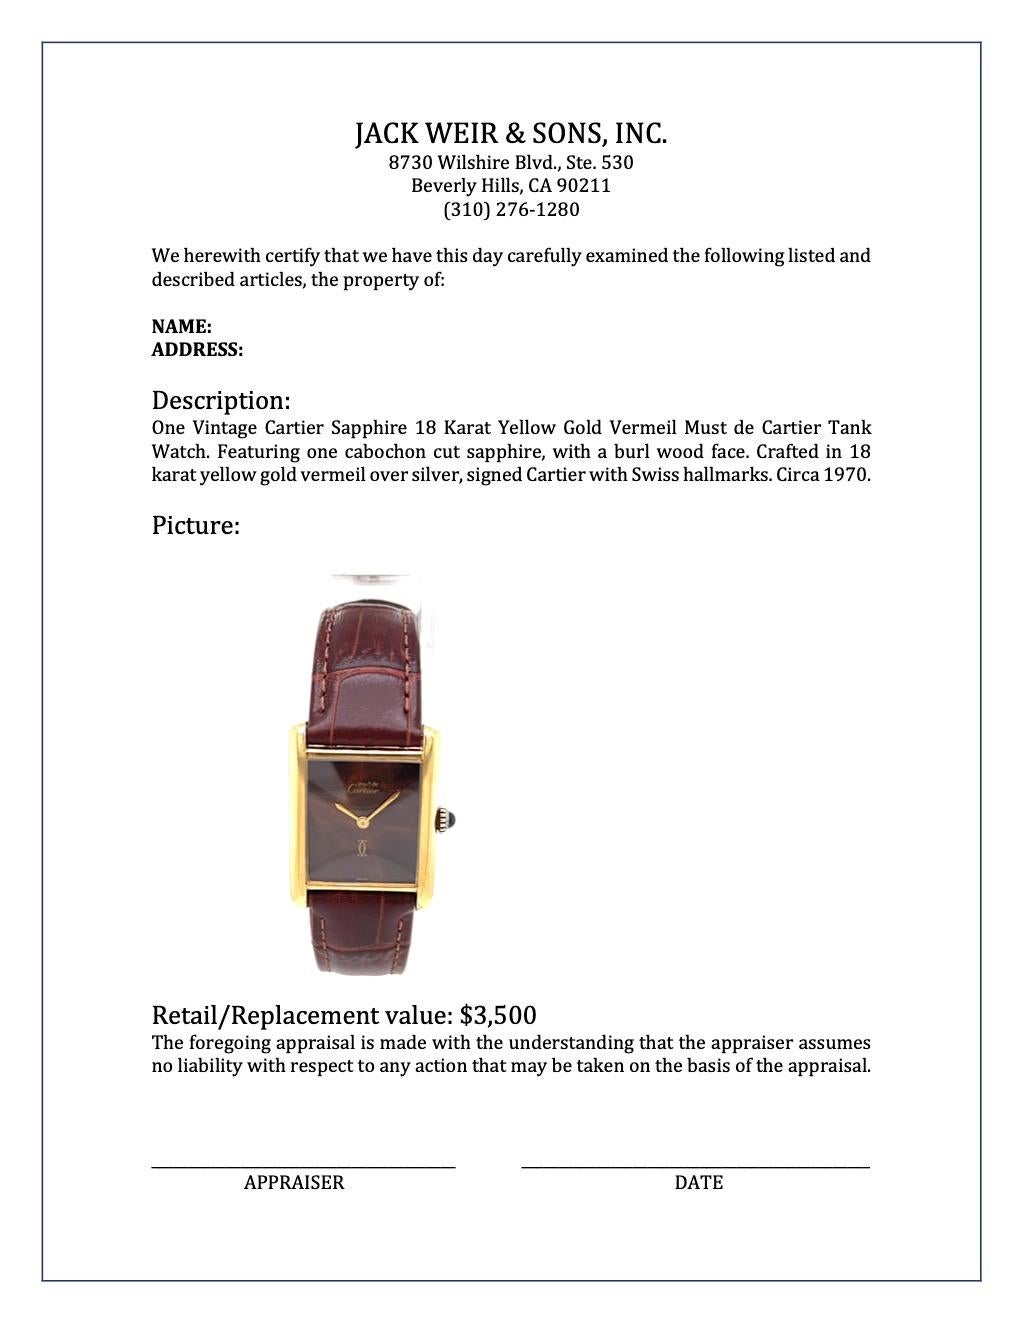 Vintage Cartier Sapphire 18 Karat Yellow Gold Vermeil Must de Cartier Tank Watch In Excellent Condition In Beverly Hills, CA